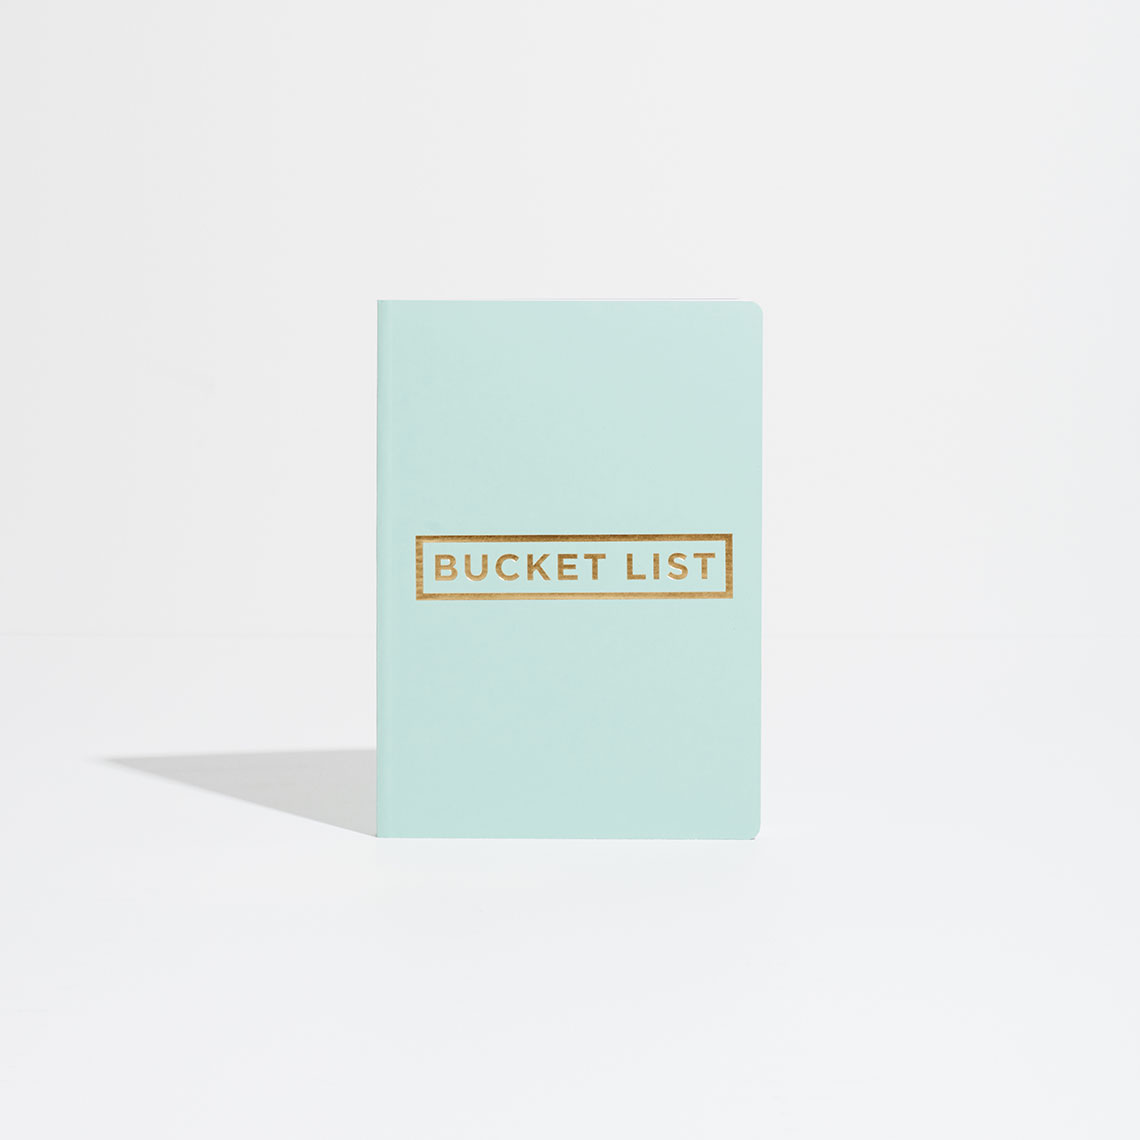 migoals_bucketlist_mint